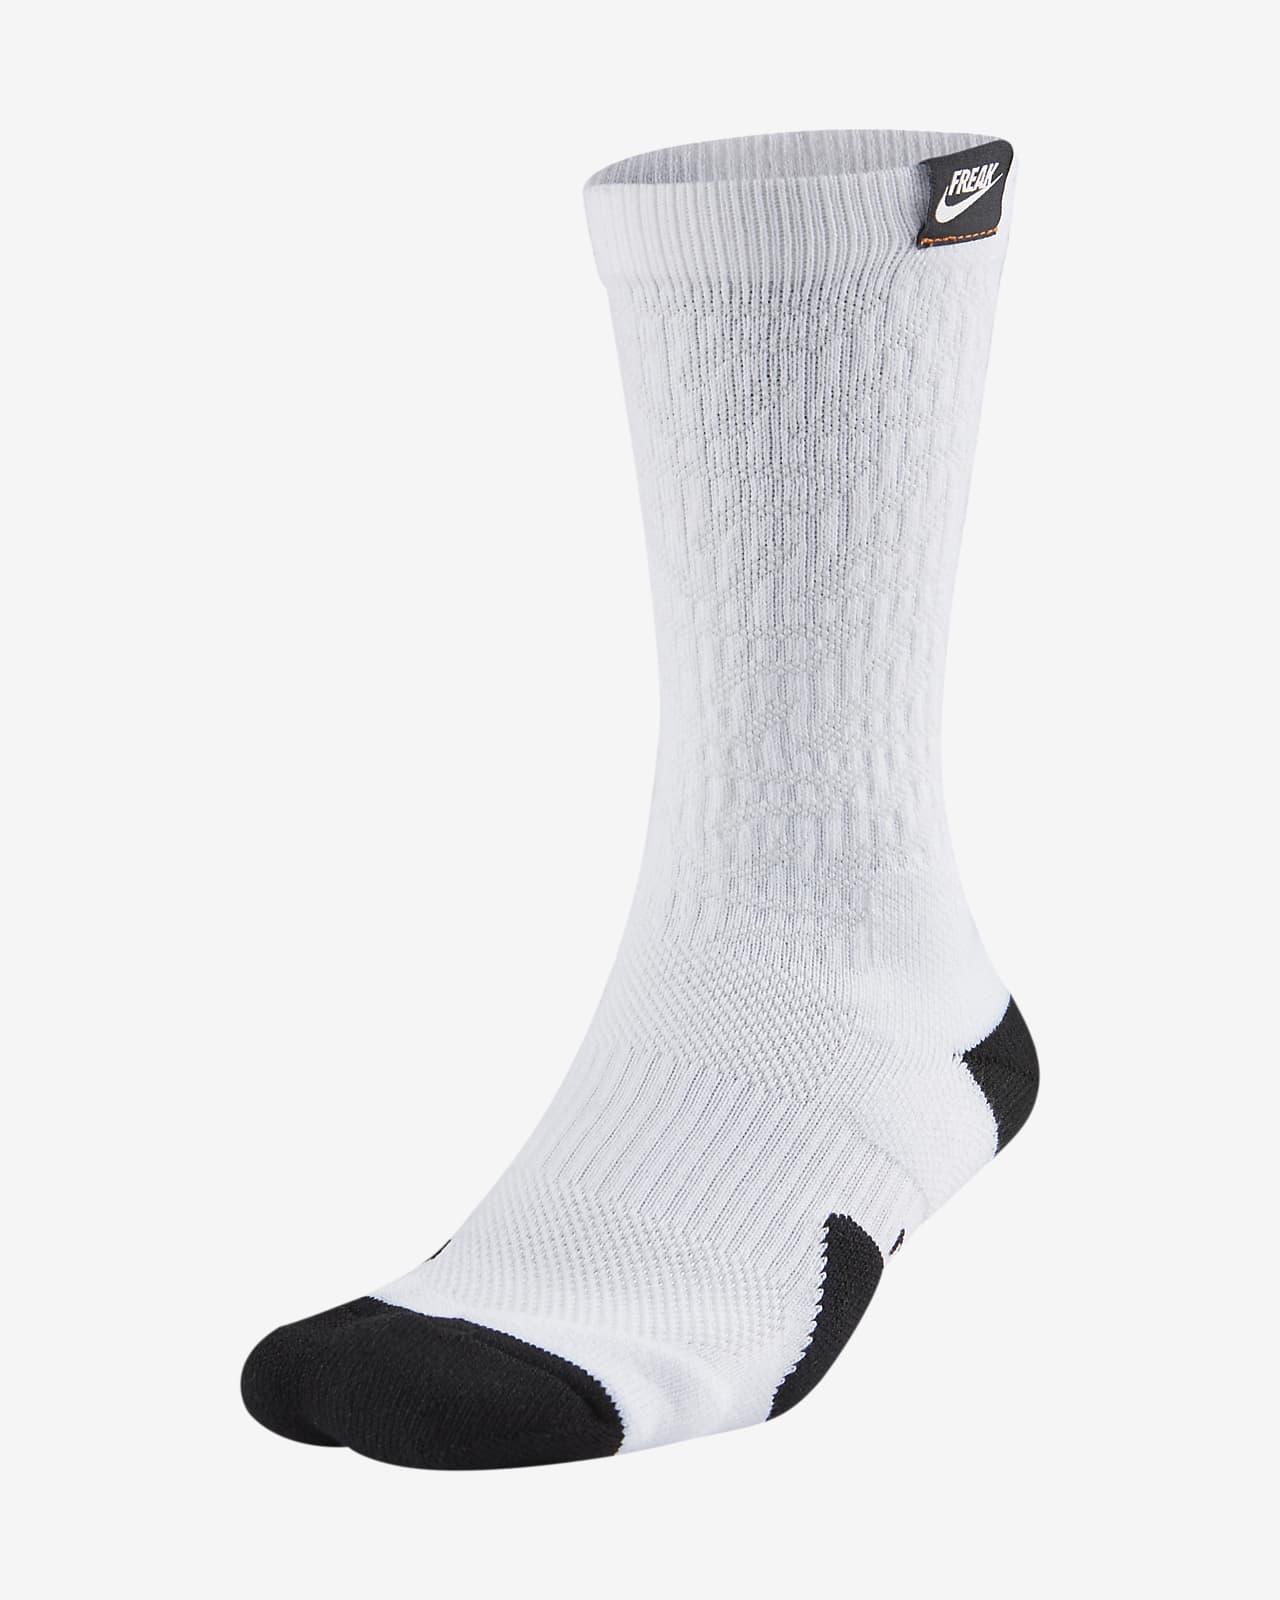 basketball elite nike socks